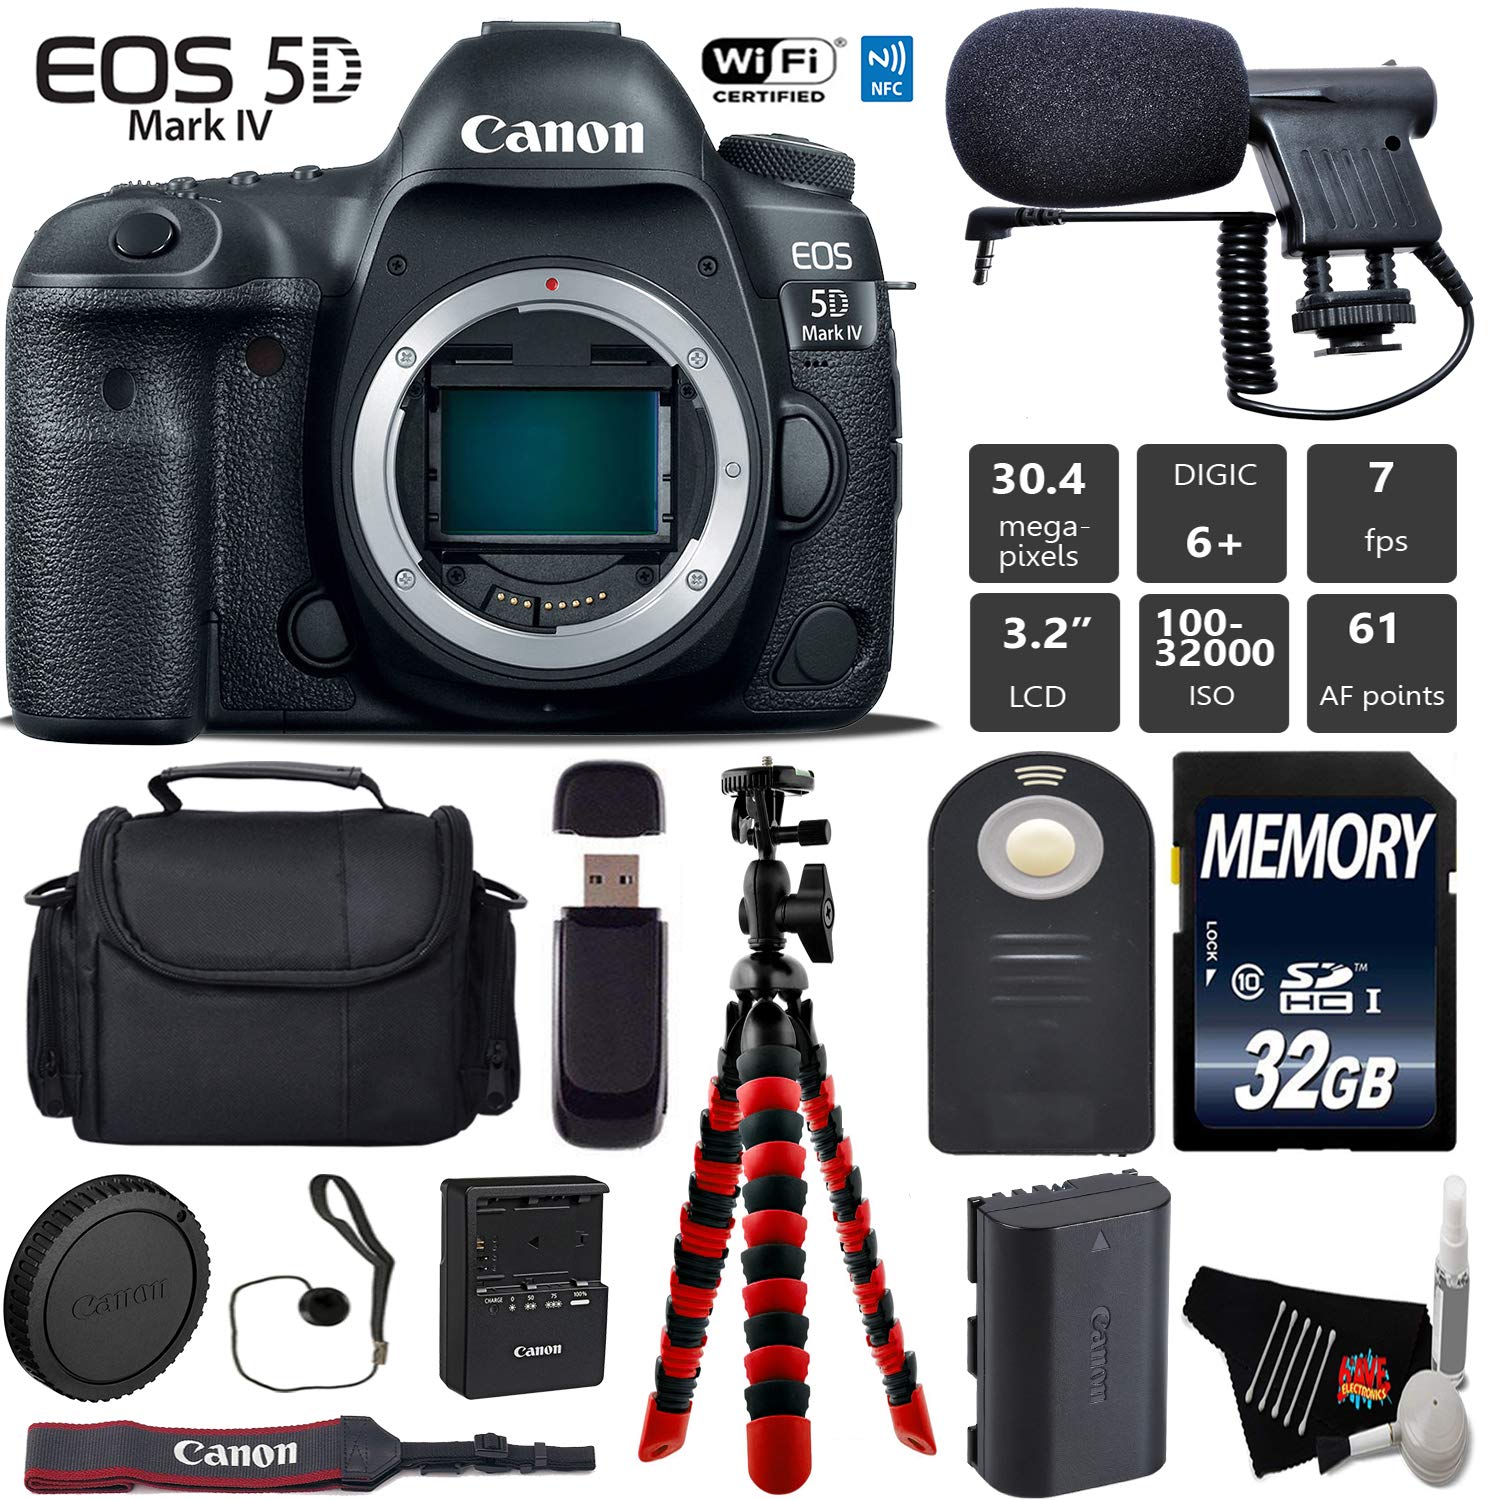 Canon EOS 5D Mark IV DSLR Camera (Body Only) + Wireless Remote + Condenser Microphone + Case + Wrist Strap + Tripod Starter Bundle